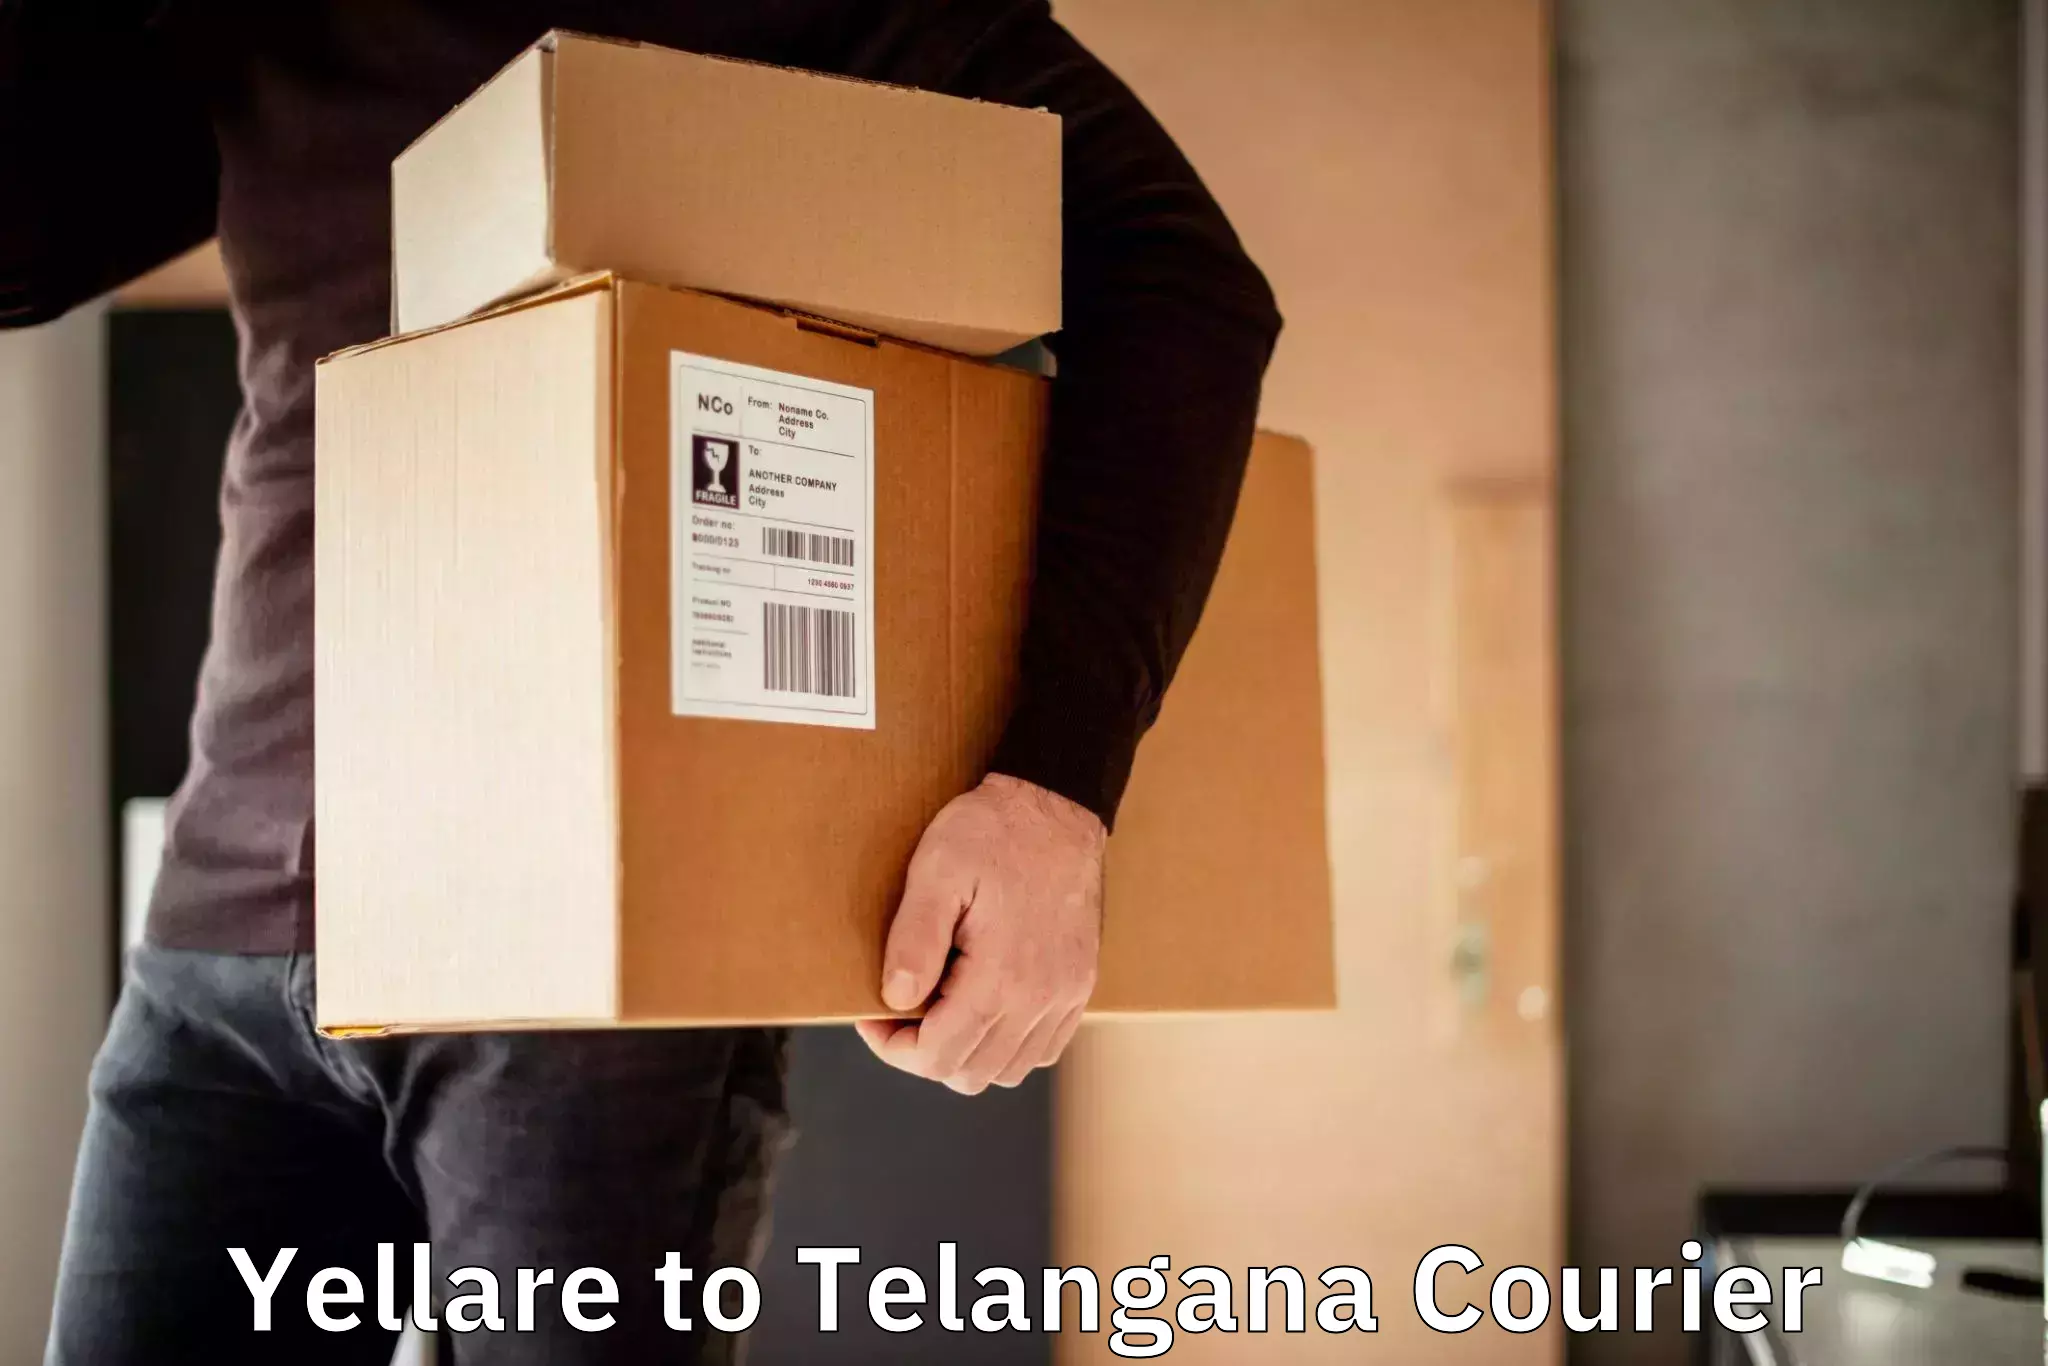 Courier service comparison Yellare to Telangana